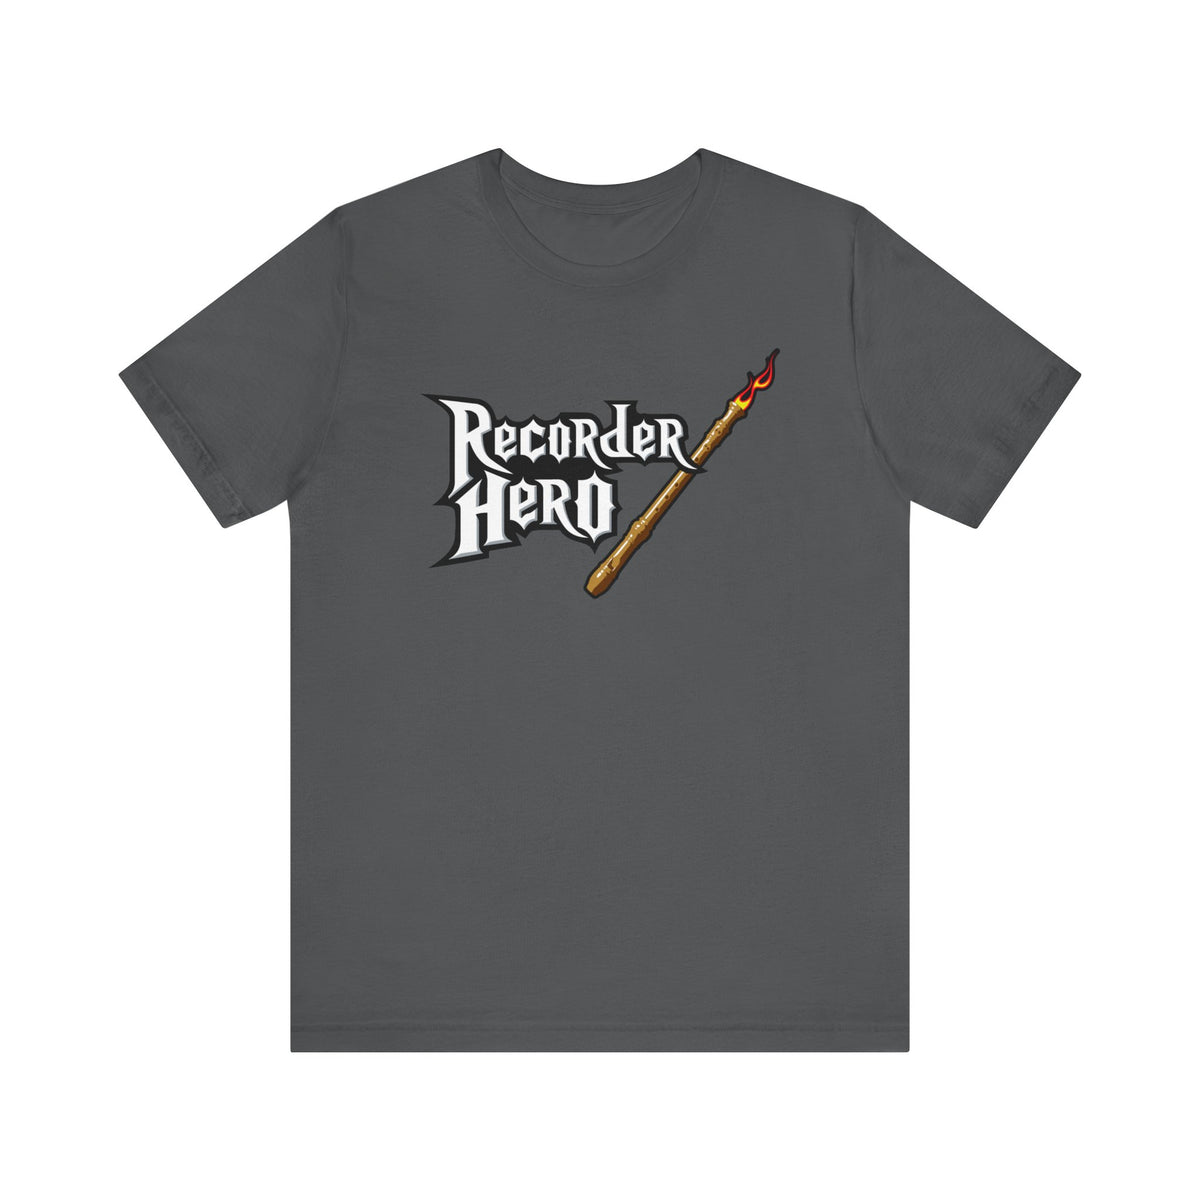 Recorded Hero - Men's T-Shirt